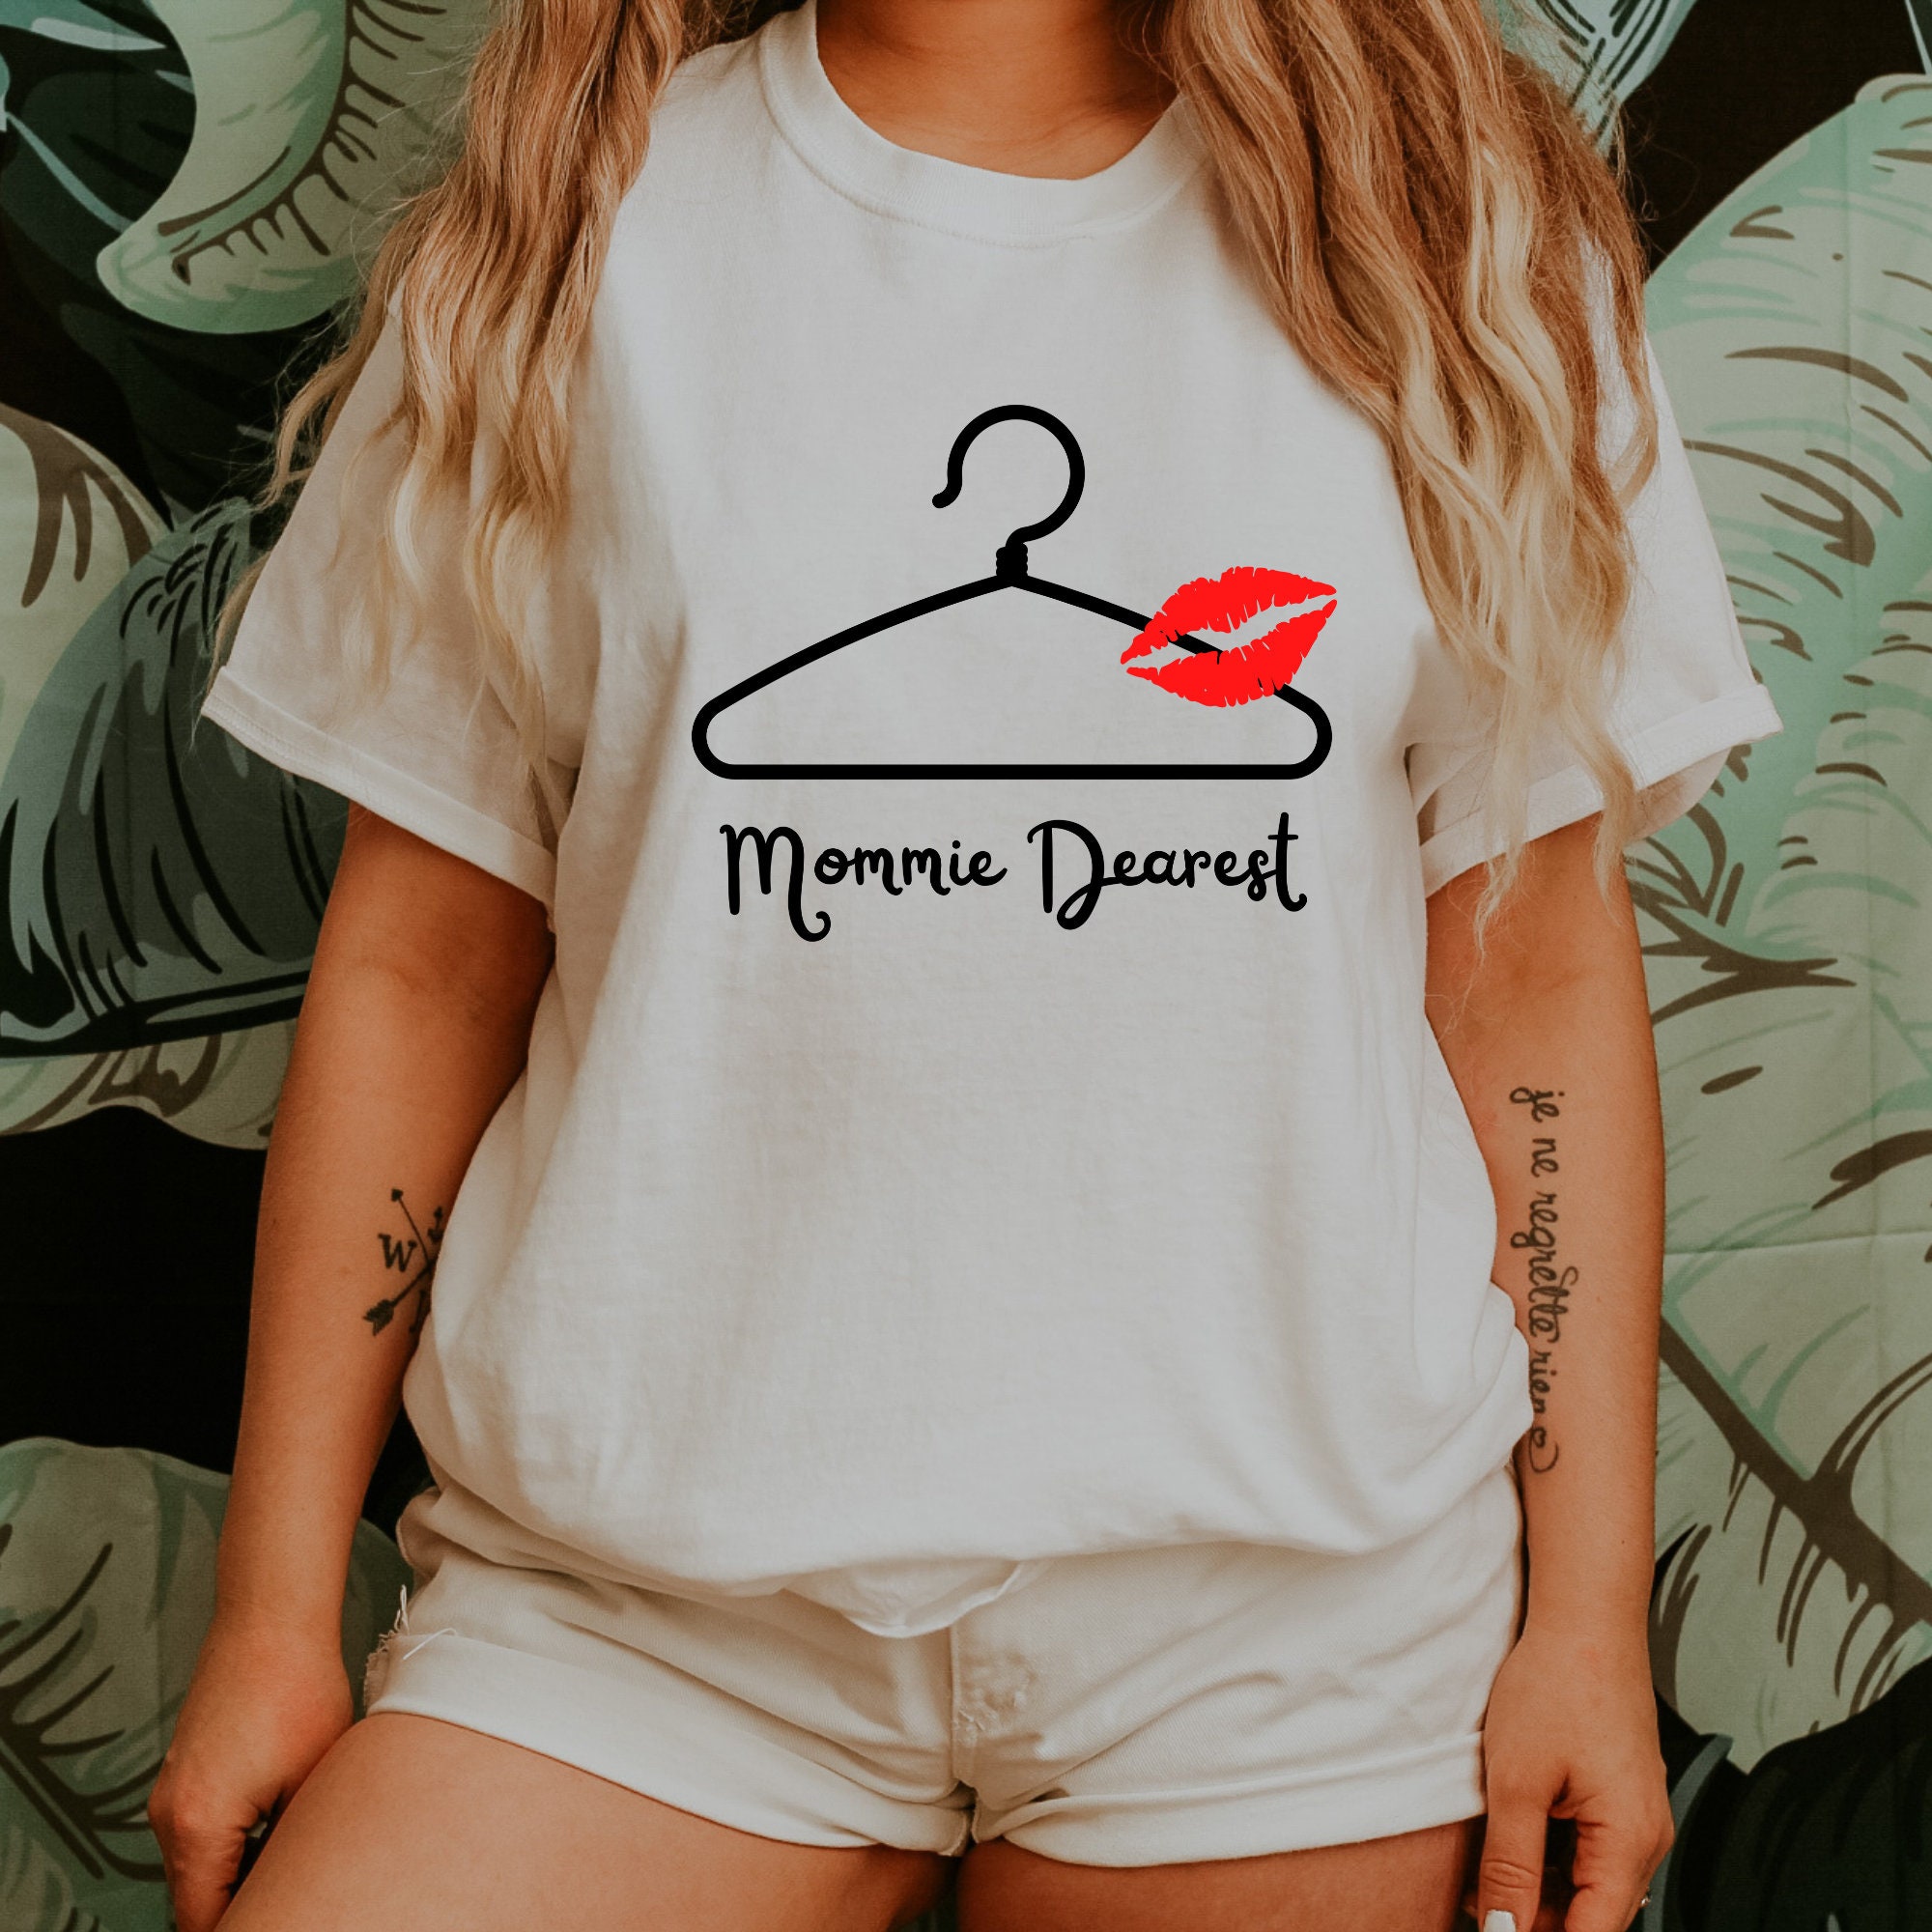 Canary Mom T-Shirt, Best Canary Mom Ever Shirt Womens Gifts - 3315 –  WaryaTshirts